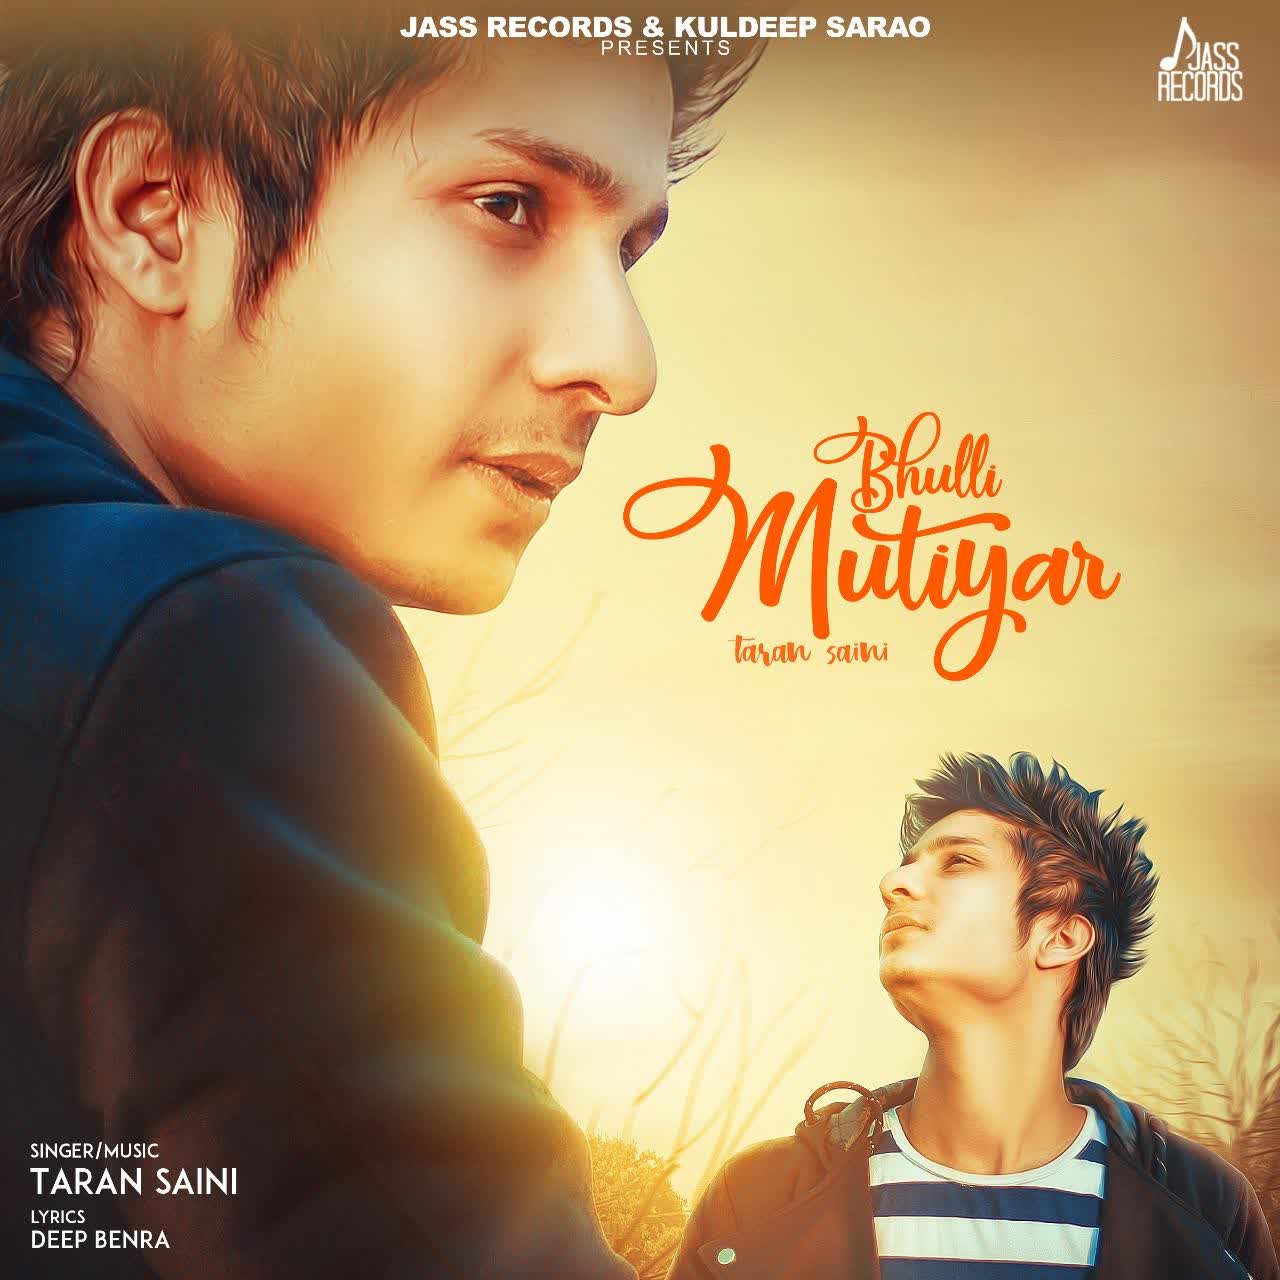 Bhulli Mutiyar Taran Saini mp3 song